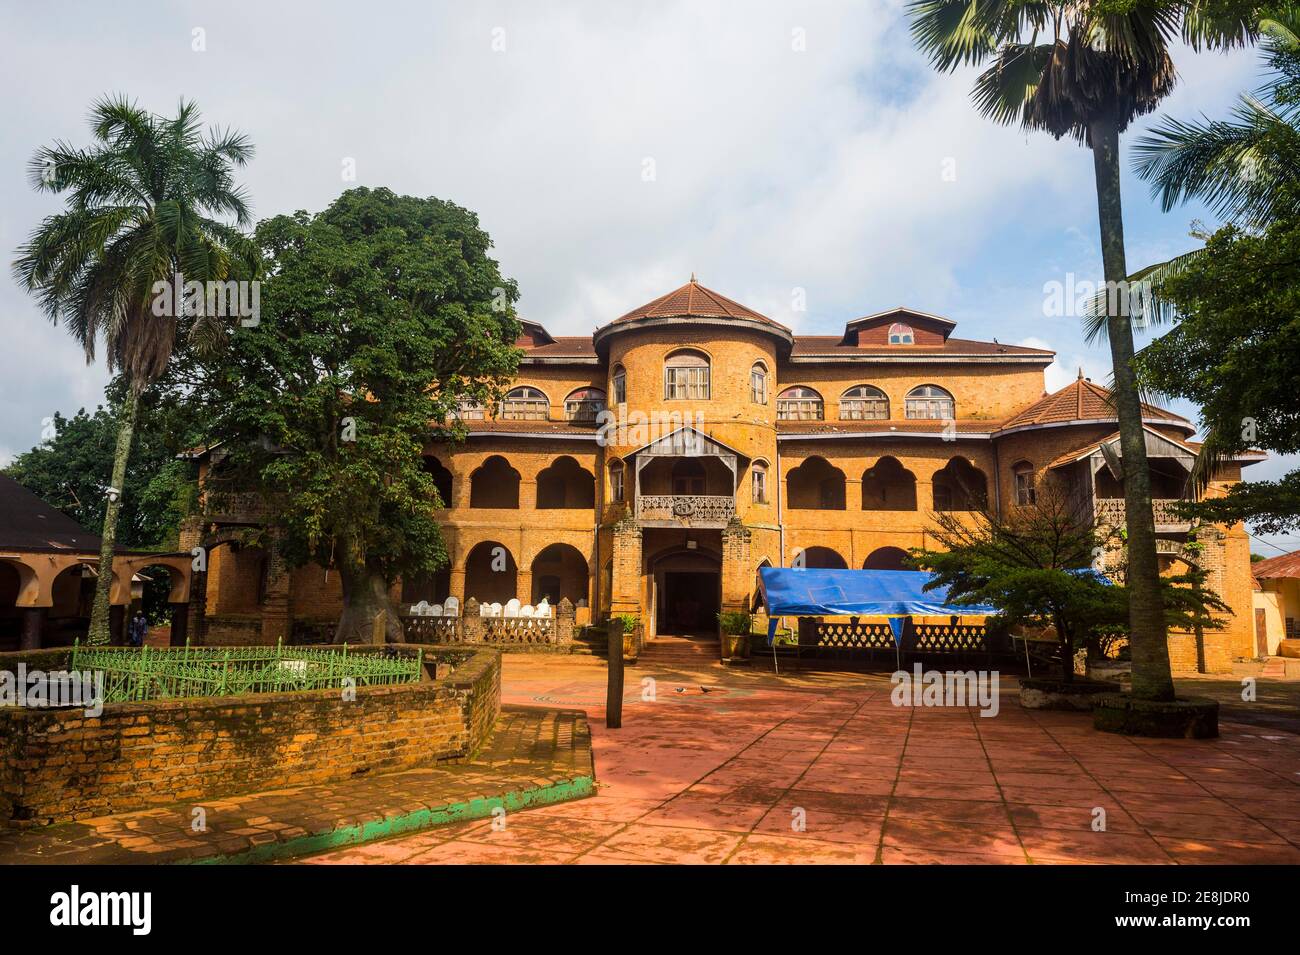 Palais du Sultan de Bamun à Foumban, Cameroun Banque D'Images